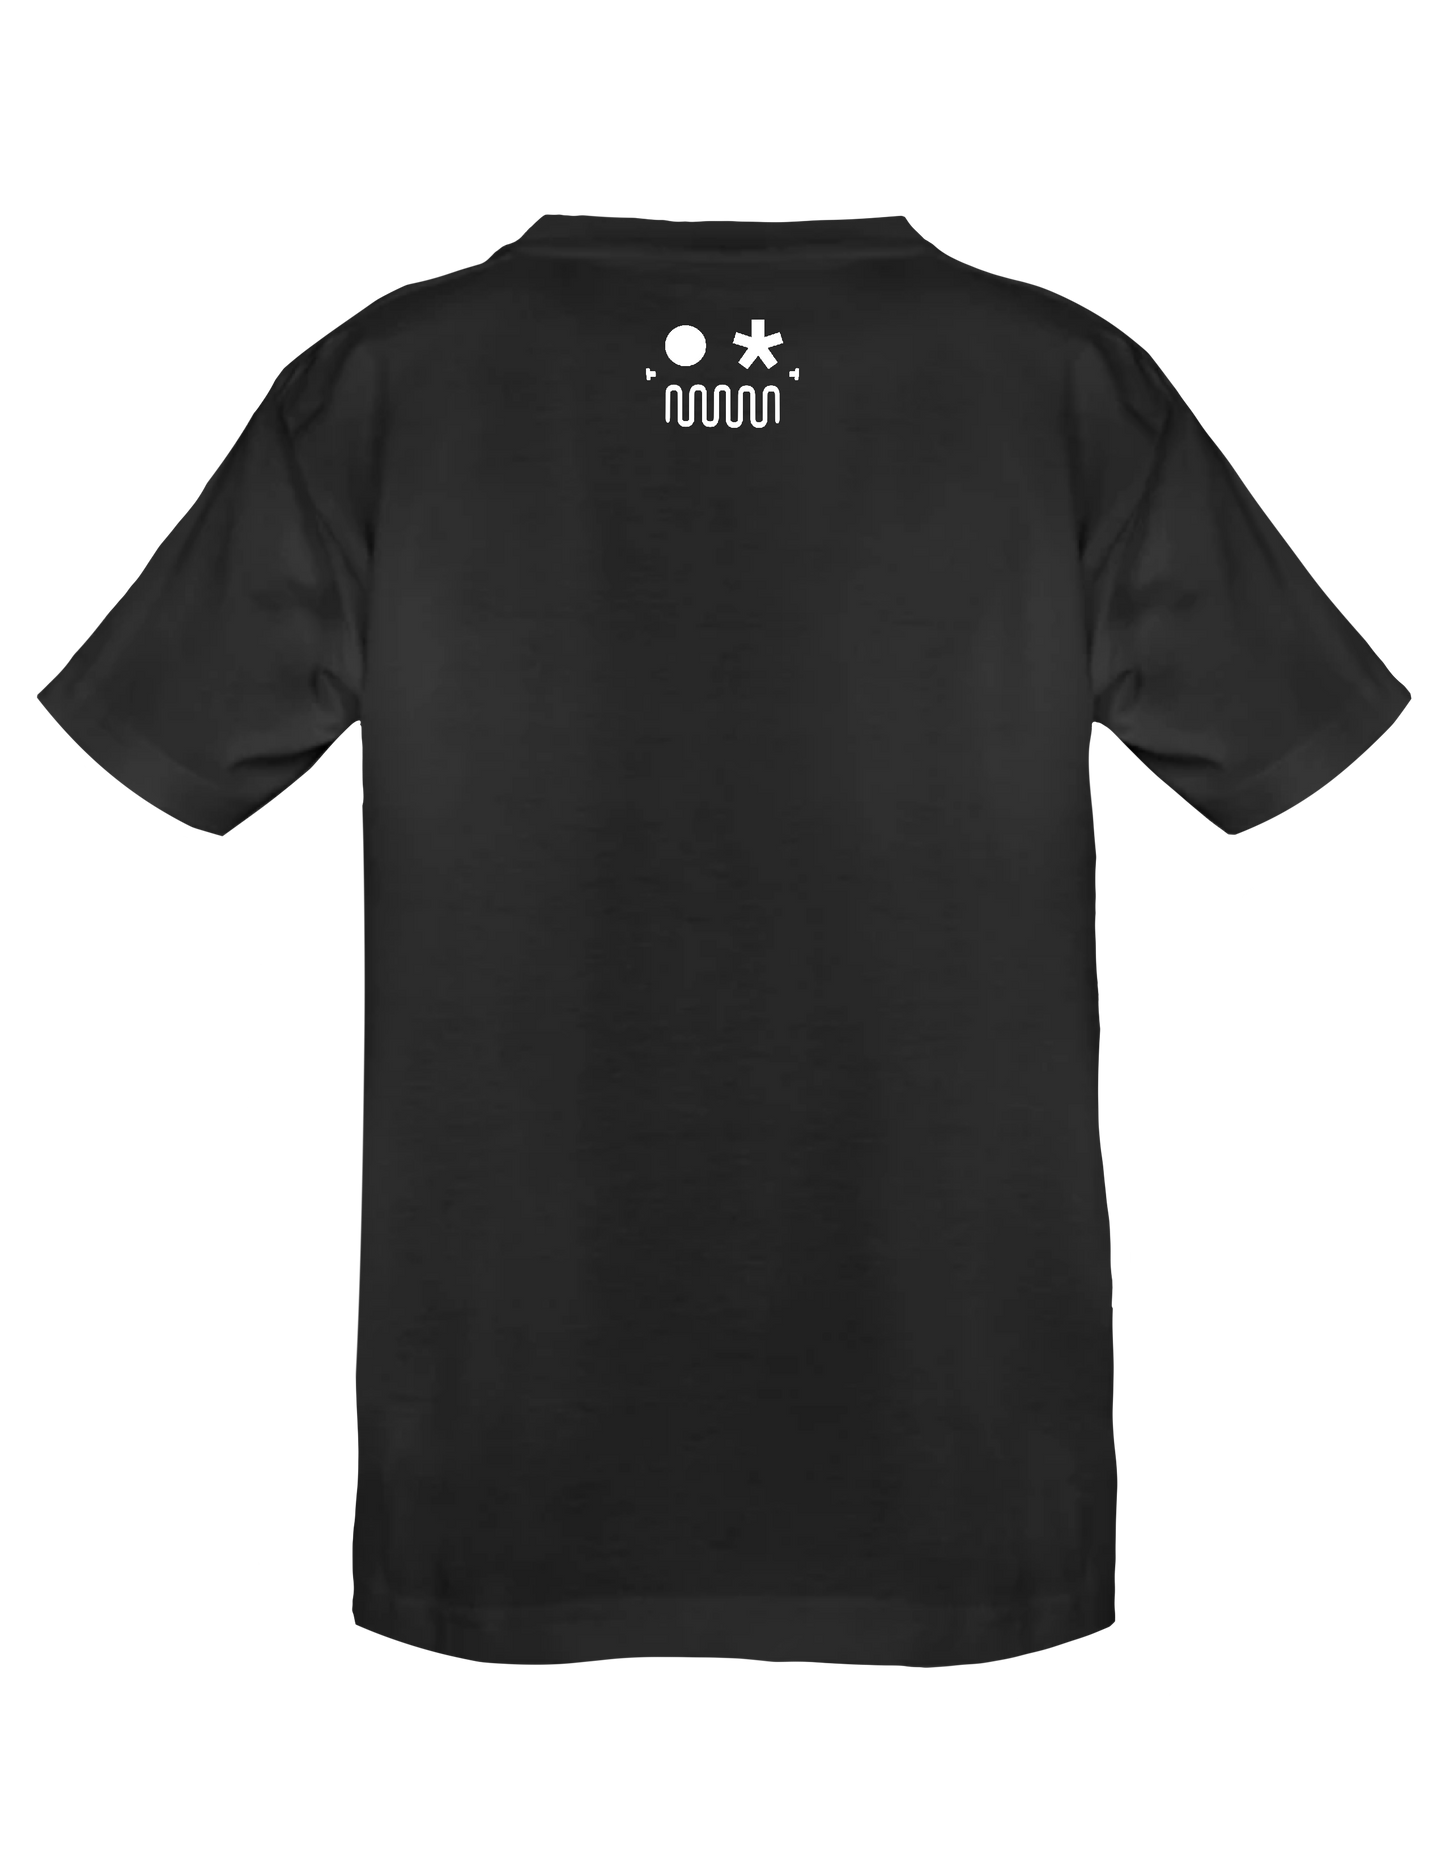 CENTRETOWN* // OTTAWA (Black) - T-Shirt by BOYSDONTDRAW